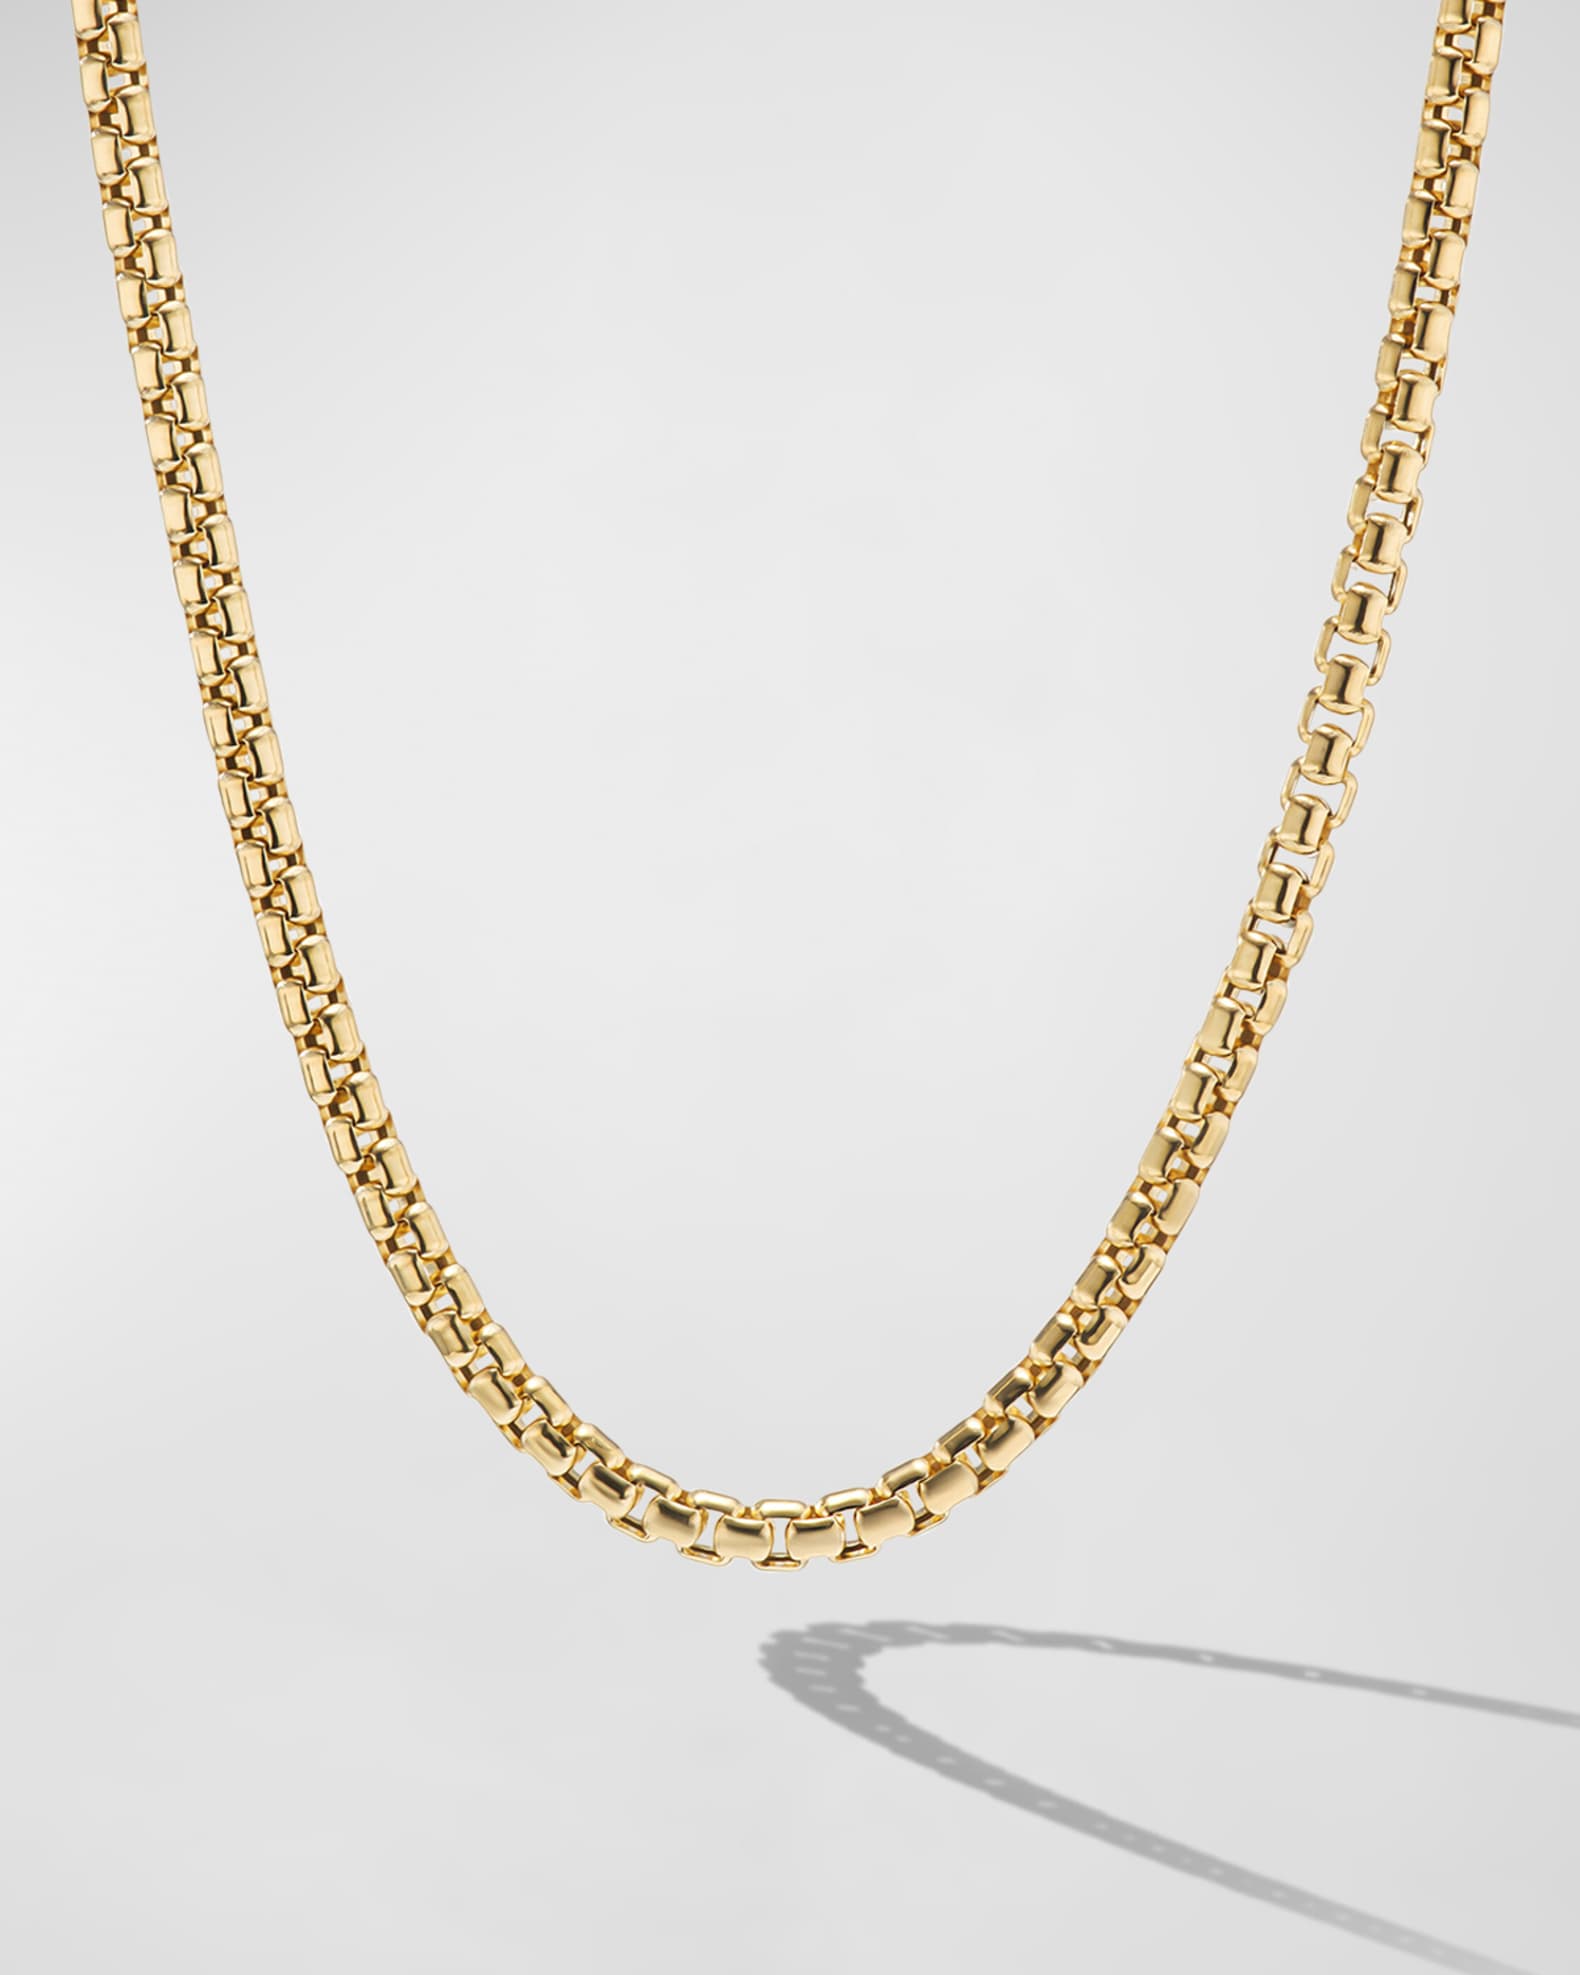 David Yurman Men's Box Chain Necklace in 18K Gold, 2.7m, 22